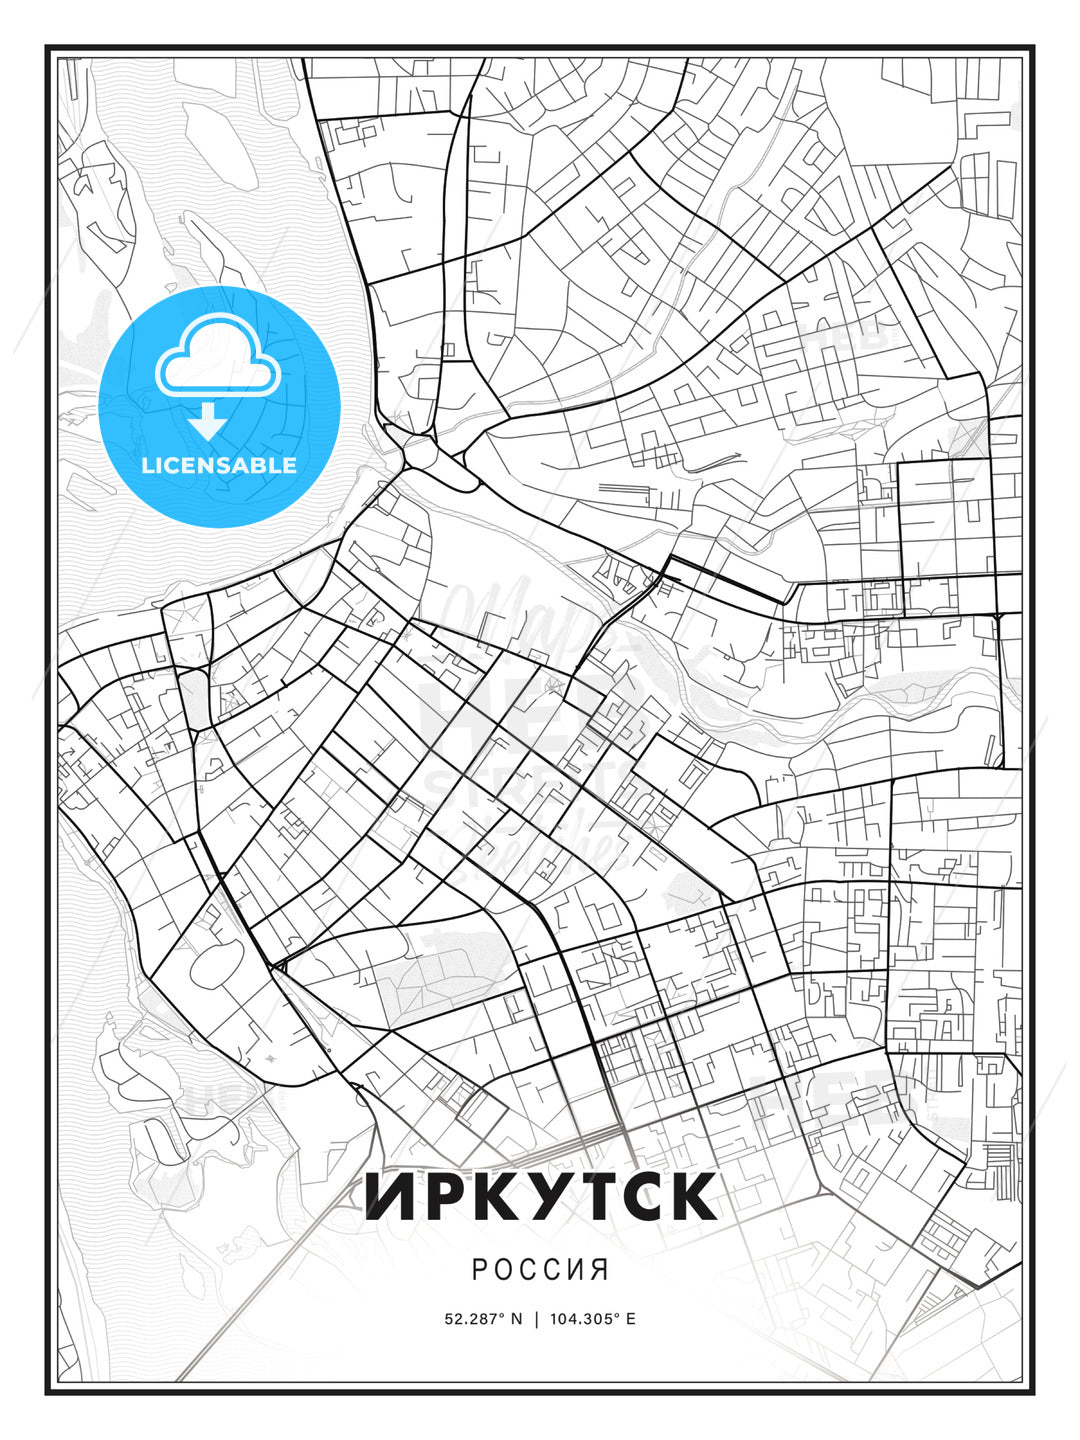 ИРКУТСК / Irkutsk, Russia, Modern Print Template in Various Formats - HEBSTREITS Sketches